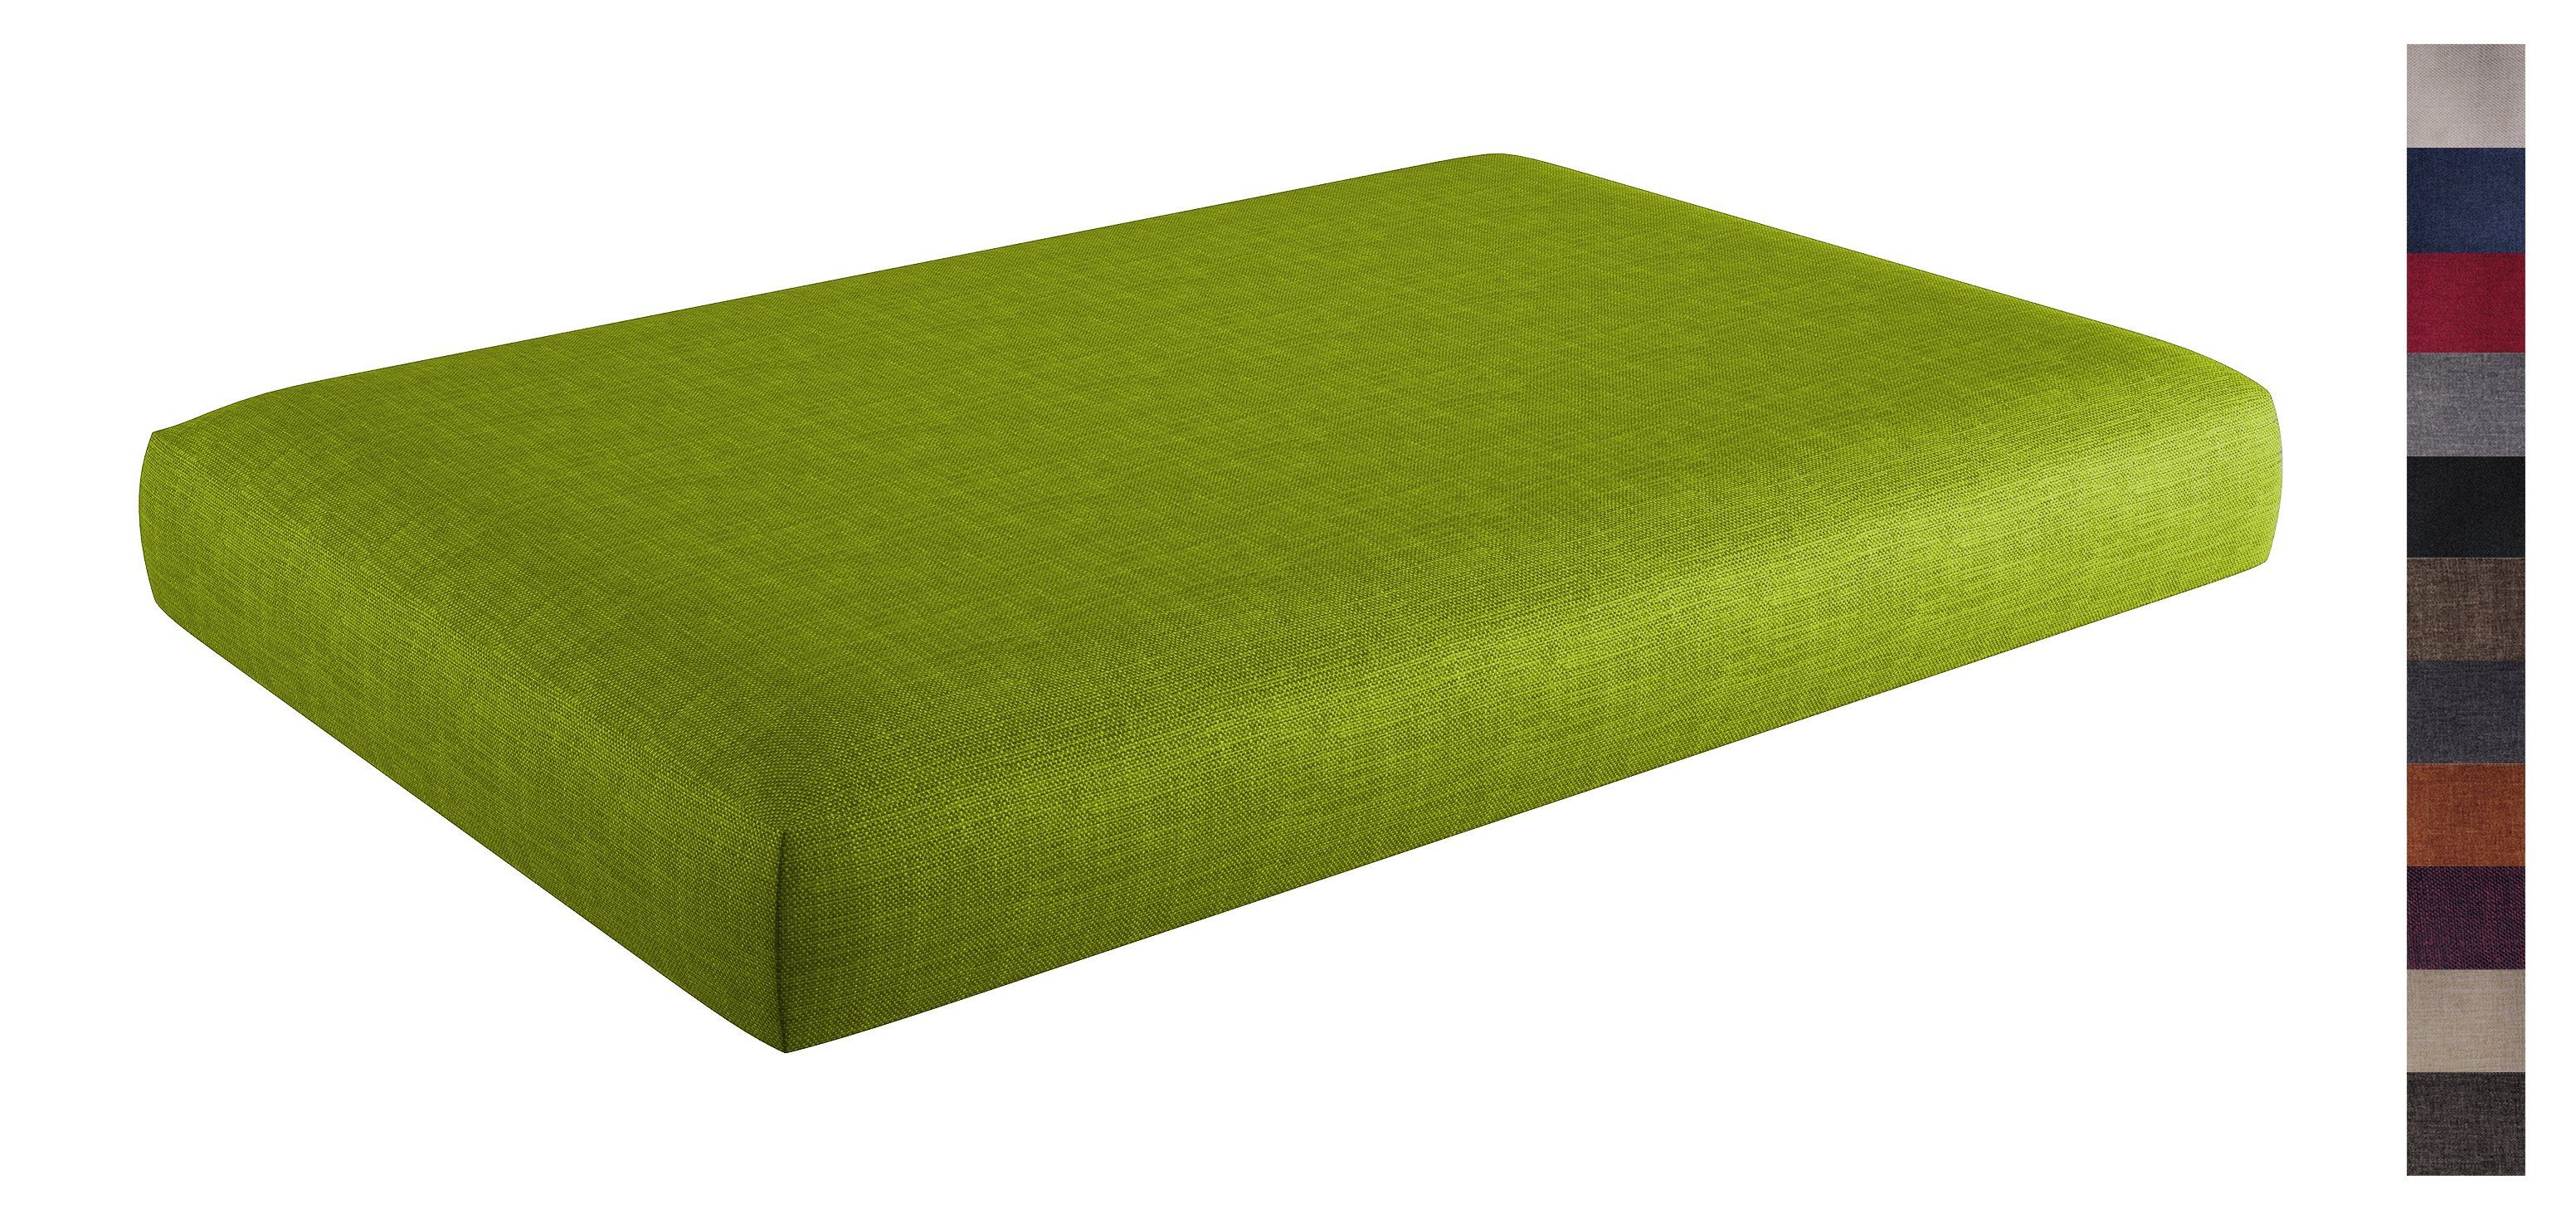 Sitzkissen Palettenkissen Sitzkissen sunnypillow 120x80x15cm, mit Bezug abnehmbarem Grün